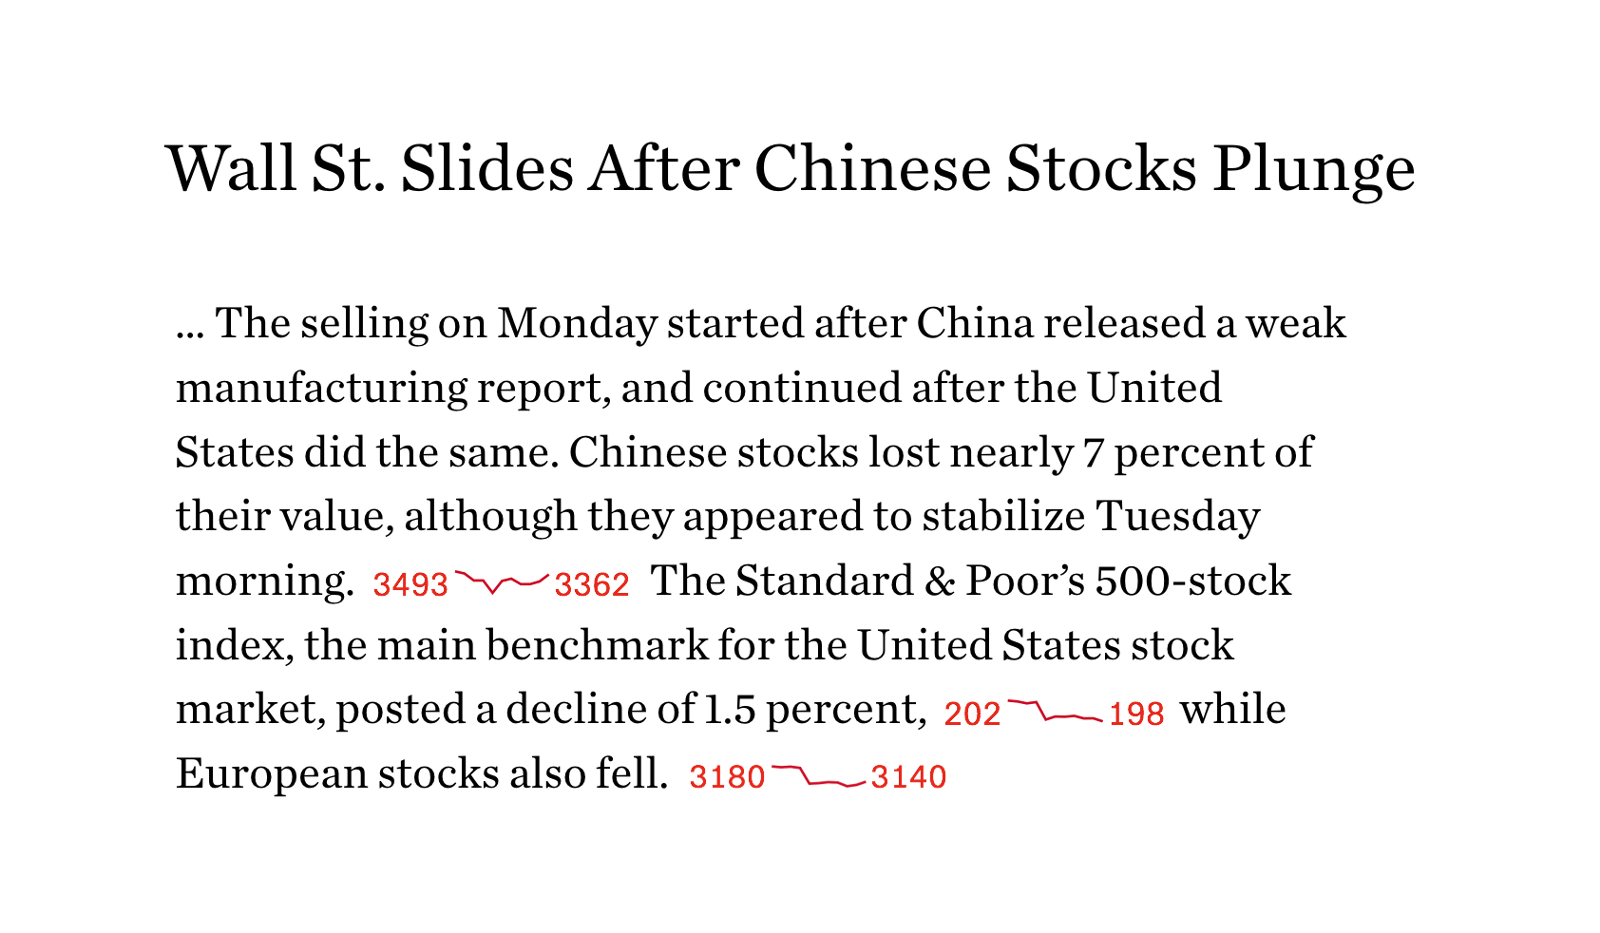 Source: http://www.nytimes.com/2016/01/05/business/international/stocks-asia-markets-china.html